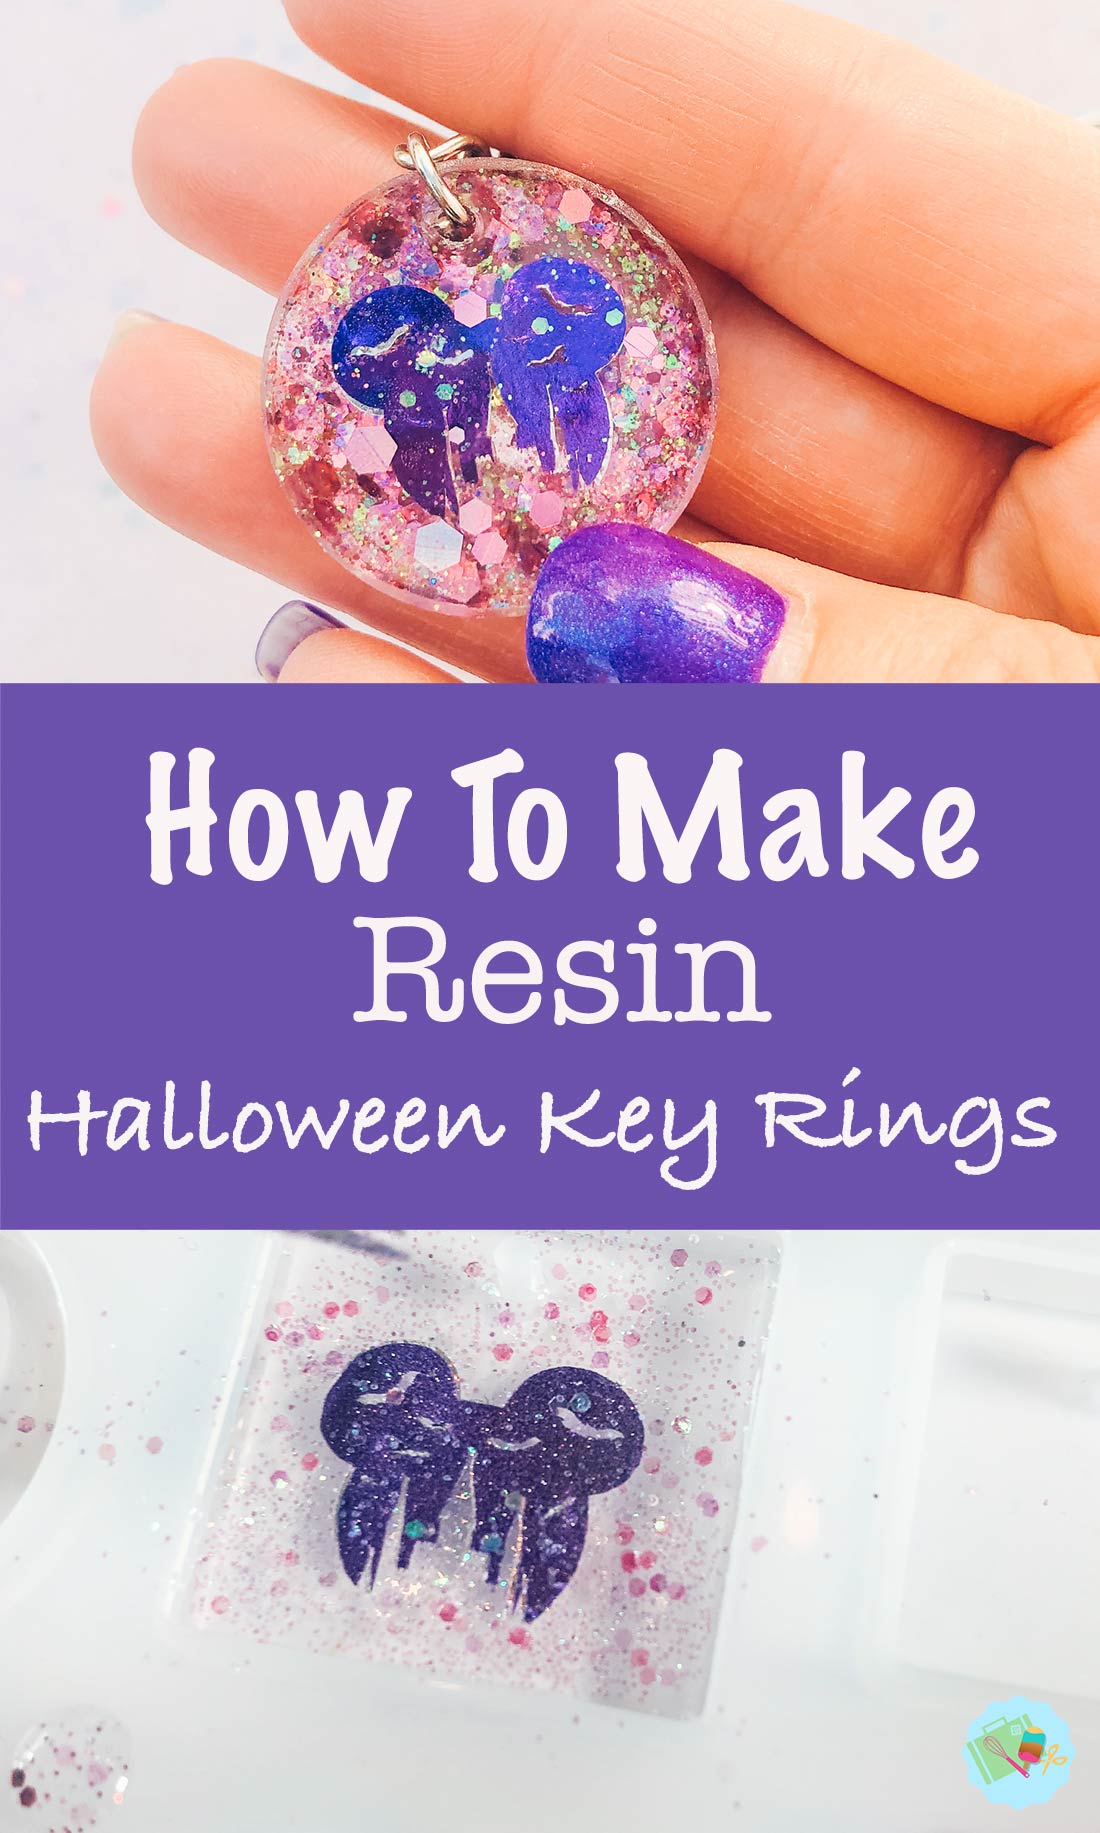 How to make resin Halloween Key rings